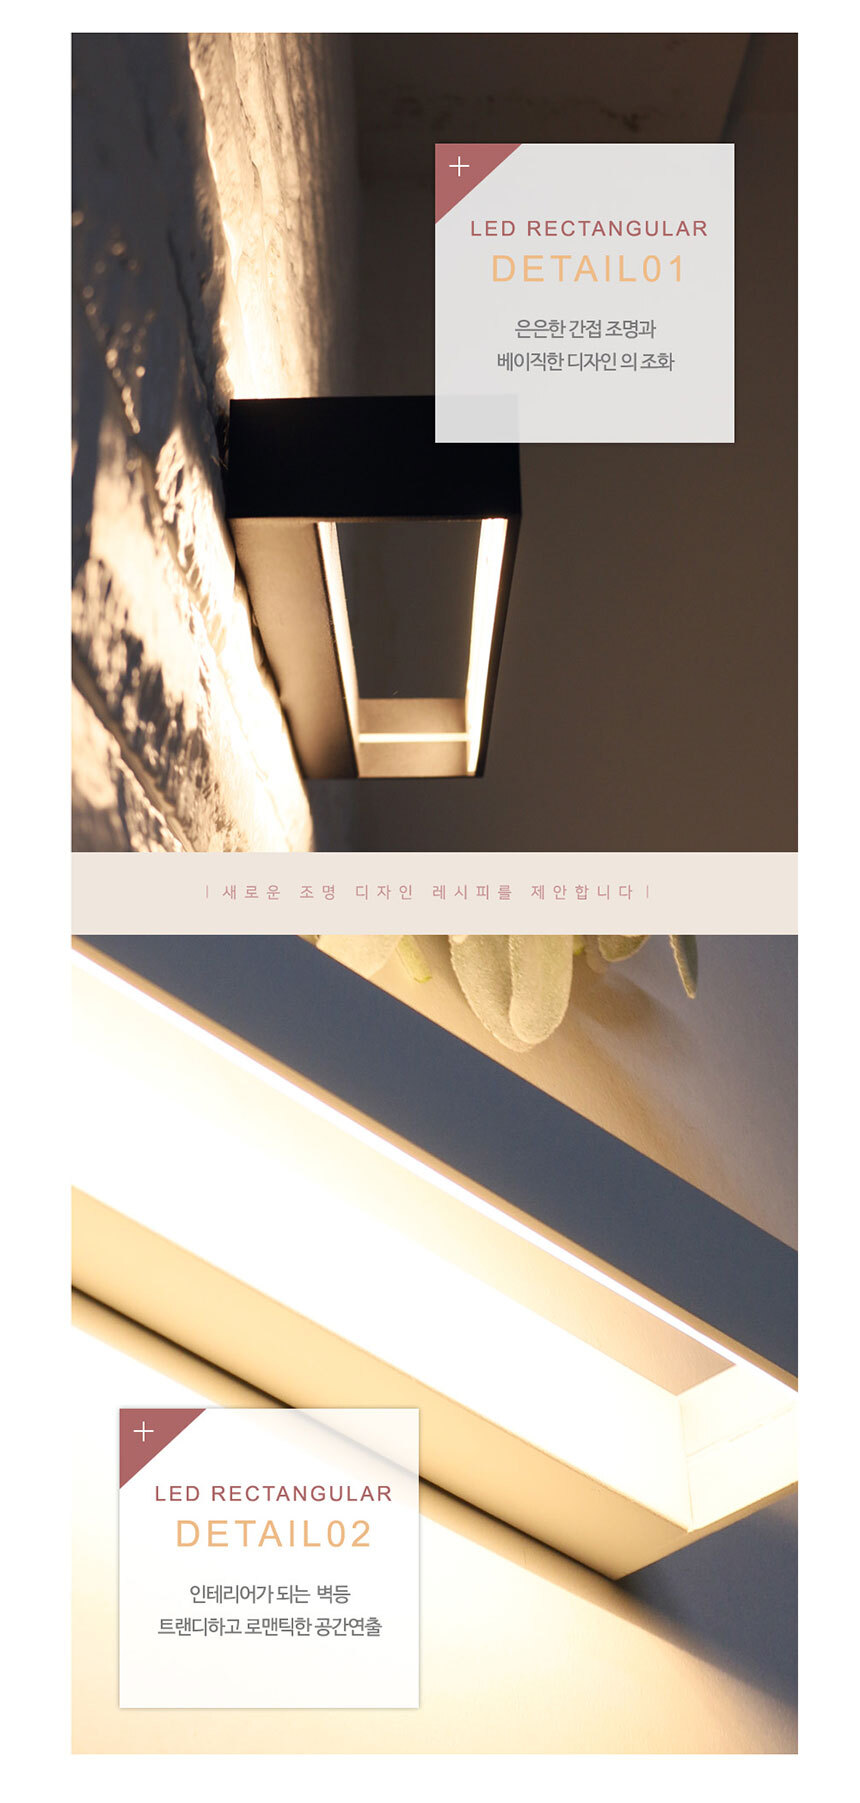 
LED RECTANGULAR DETAIL01
은은한 간접조명과 베이직한 디자인의 조화

LED RECTANGULAR DETAIL02
인테리어가 되는 벽등 트랜디하고 로맨틱한 공간연출

